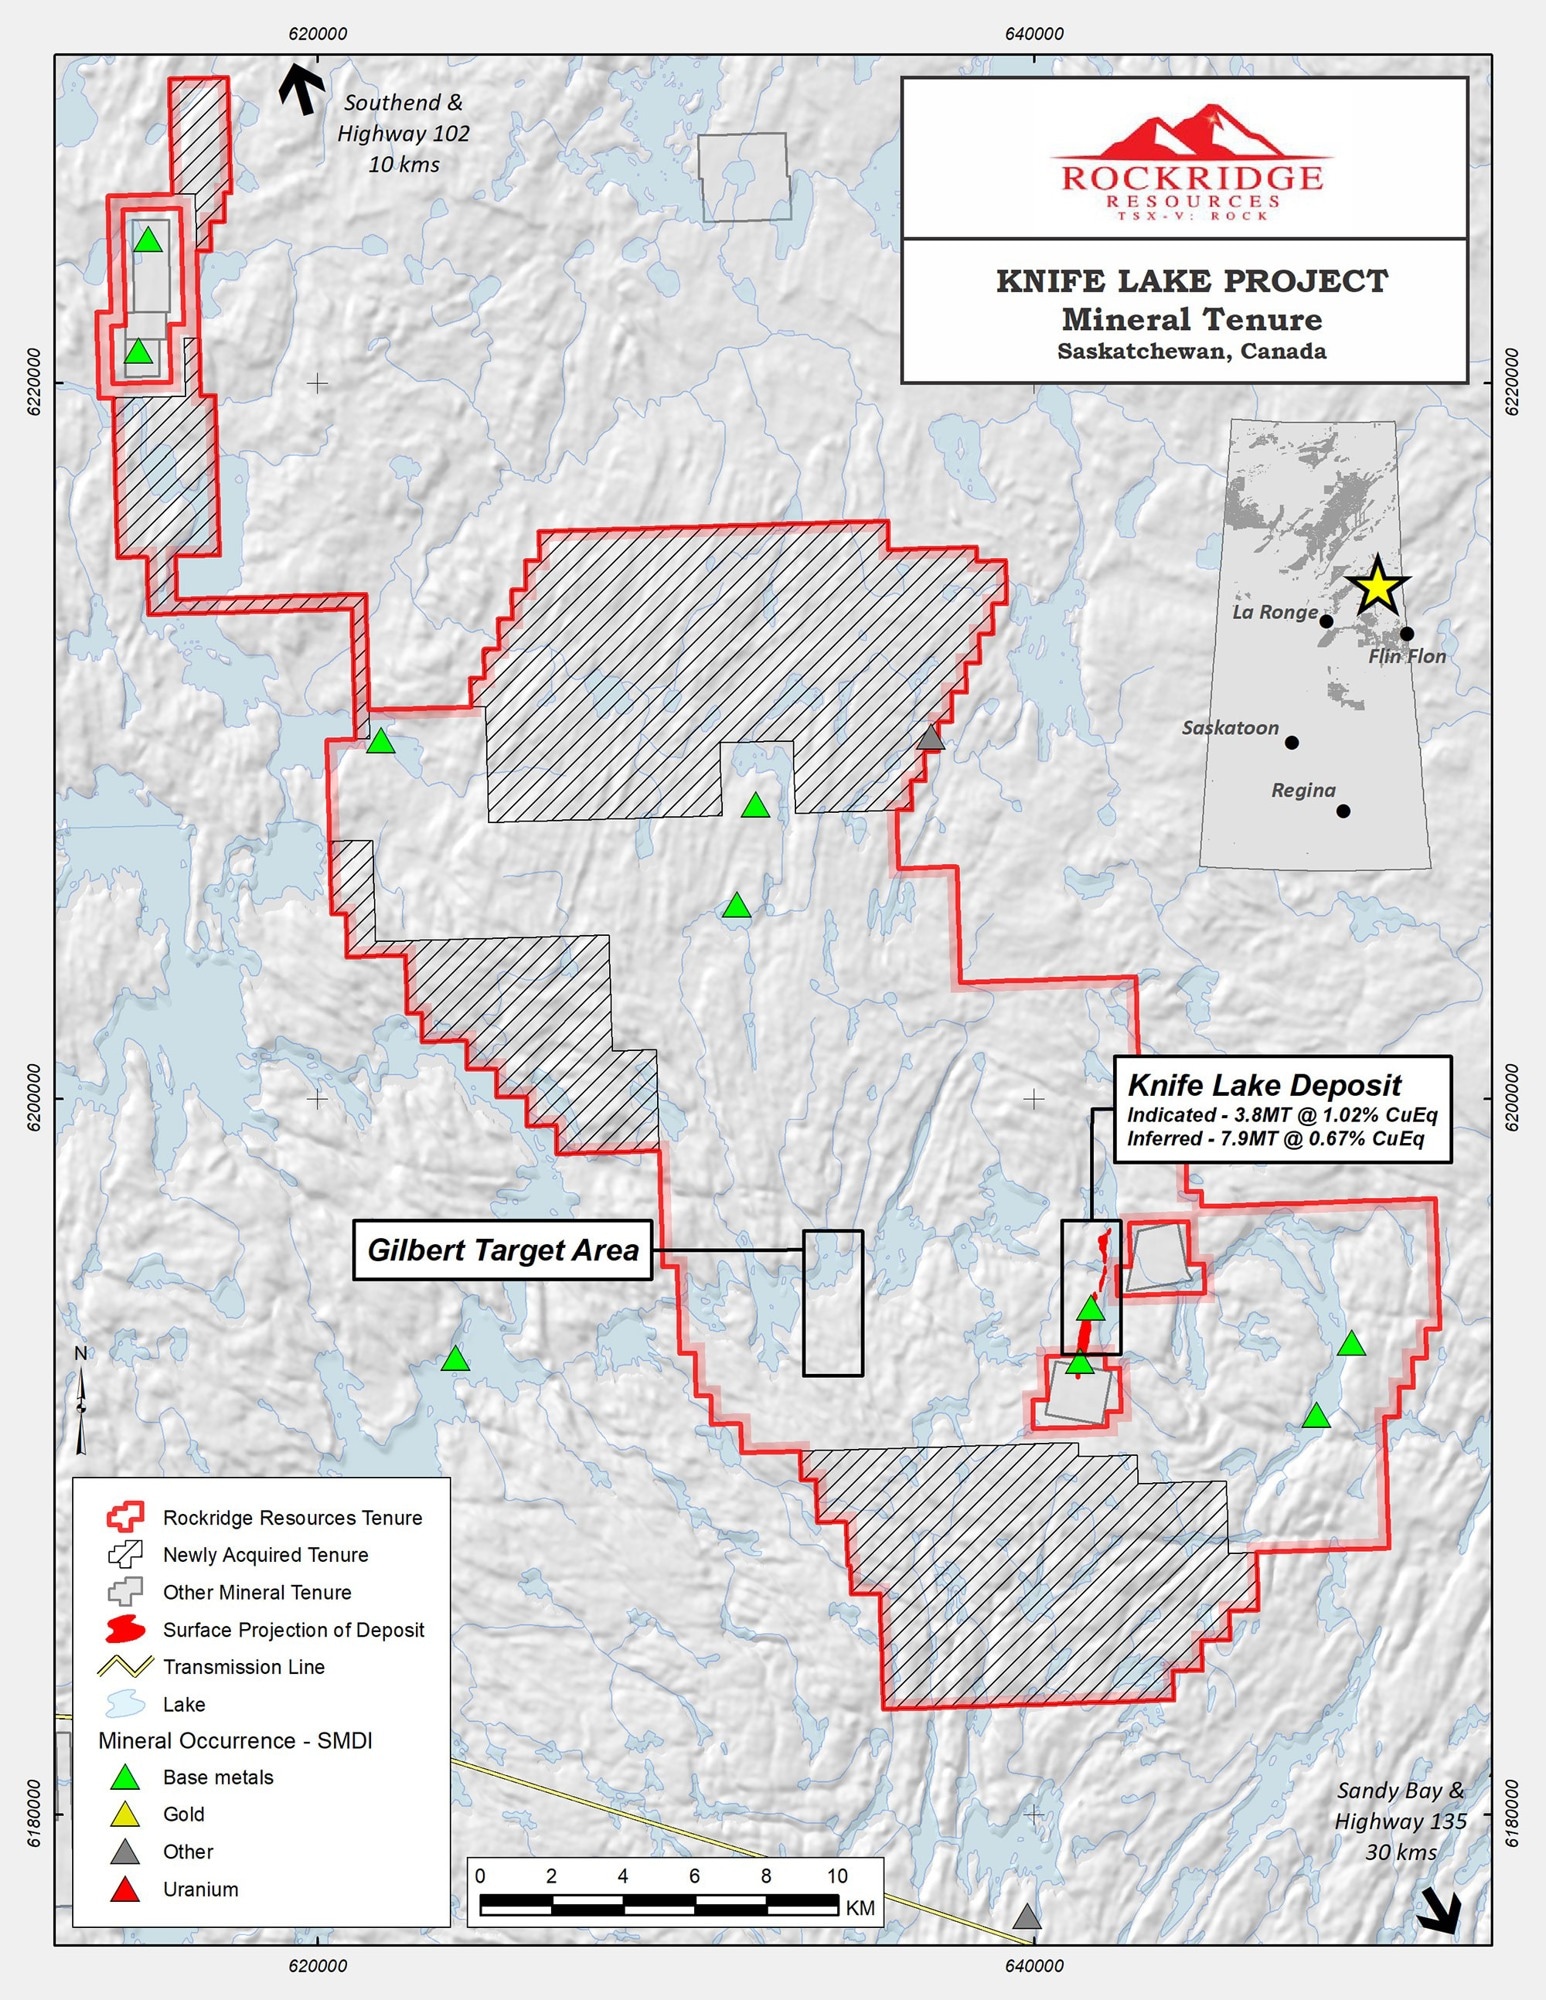 Knife Lake VMS Project Location Map. Image Credit: Rockridge Resources Ltd.